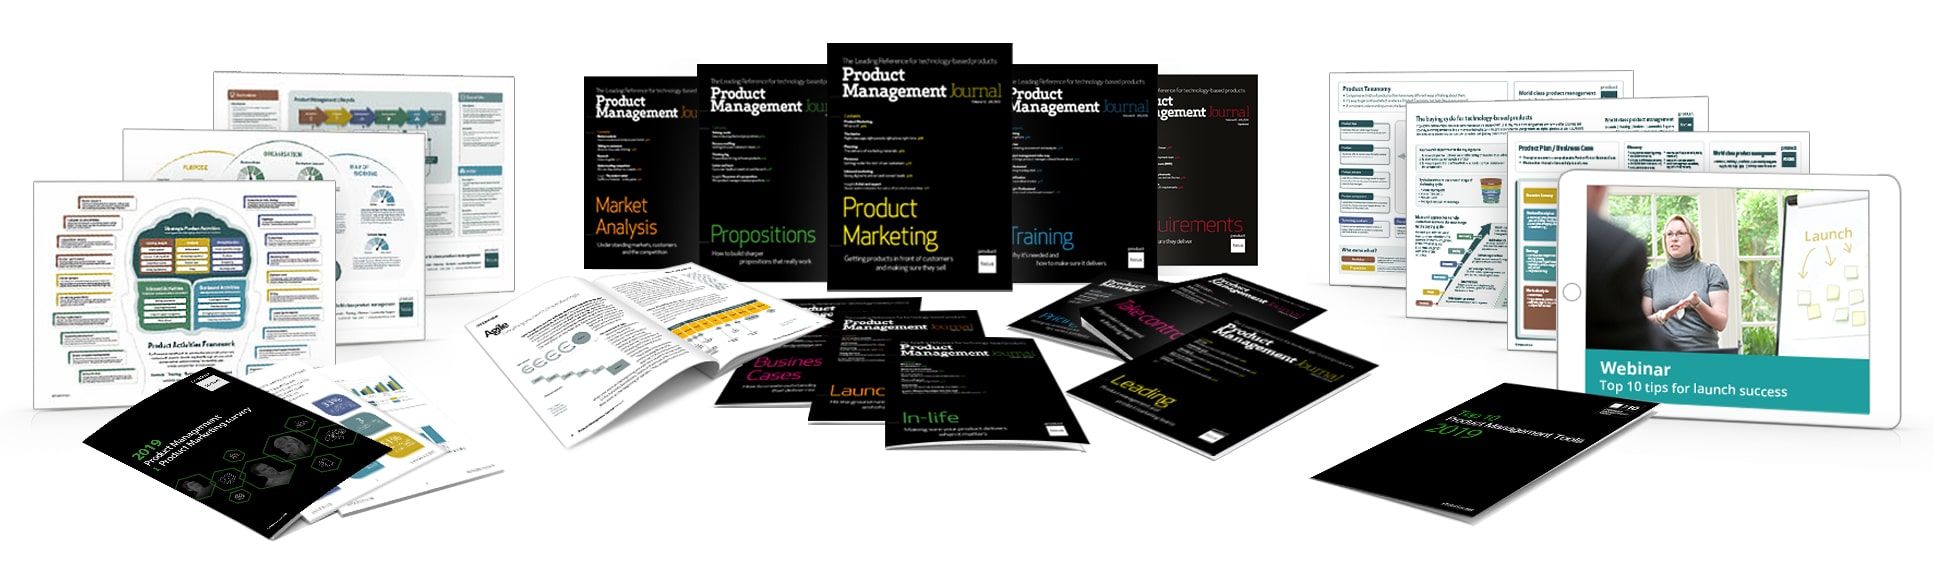 Product Management Resources